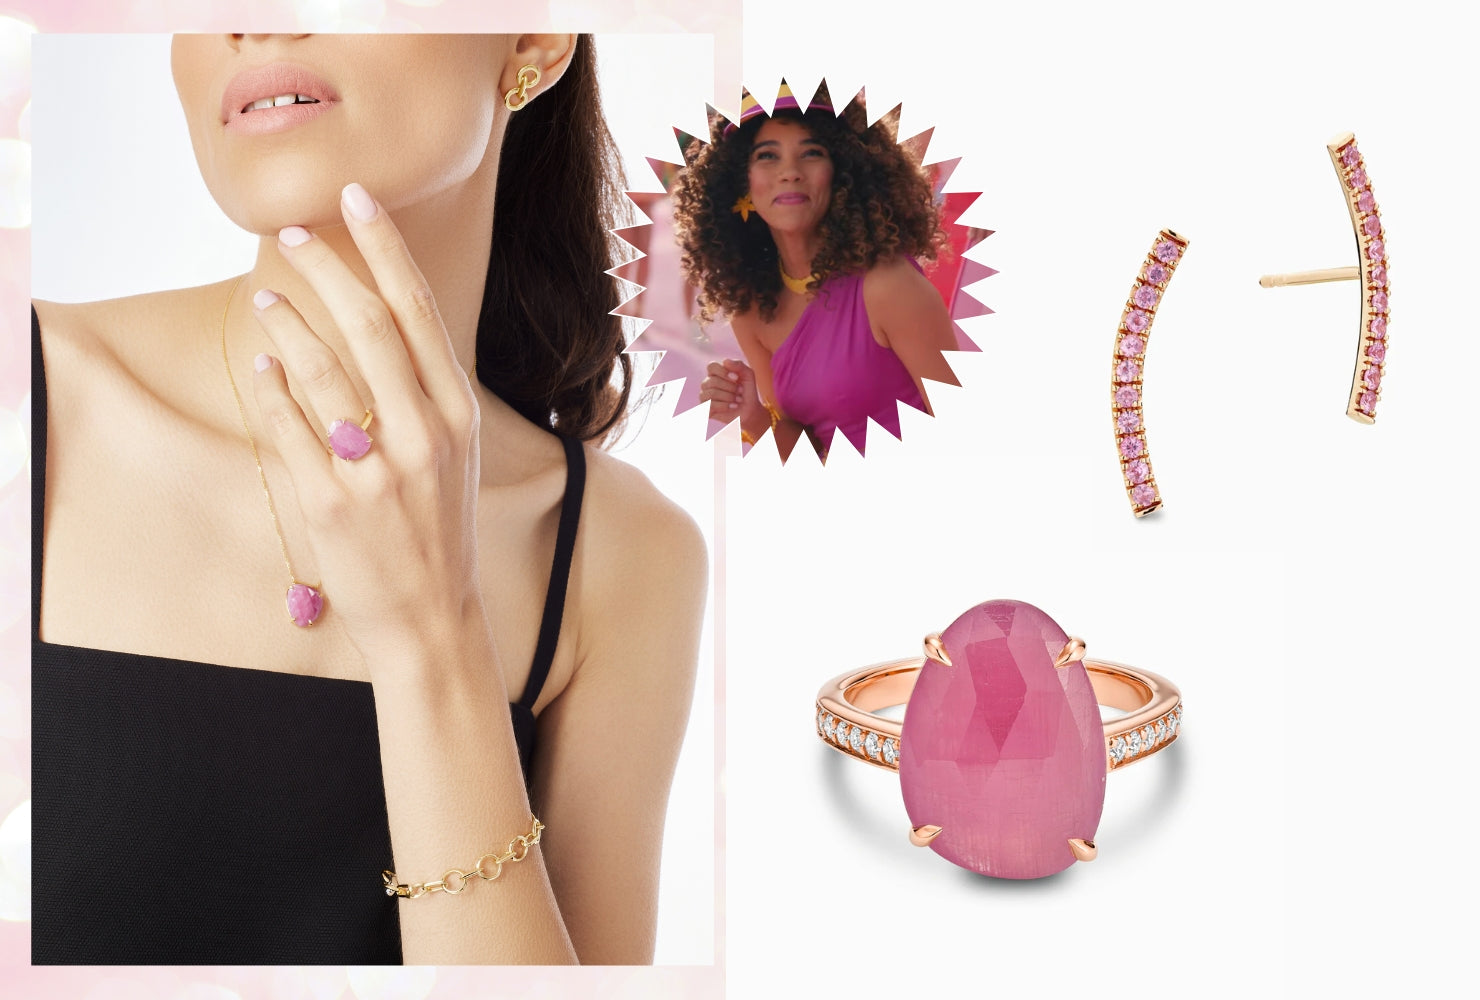 Model wearing pink sapphire jewelry next to an image of Alexandra Shipp's Barbie